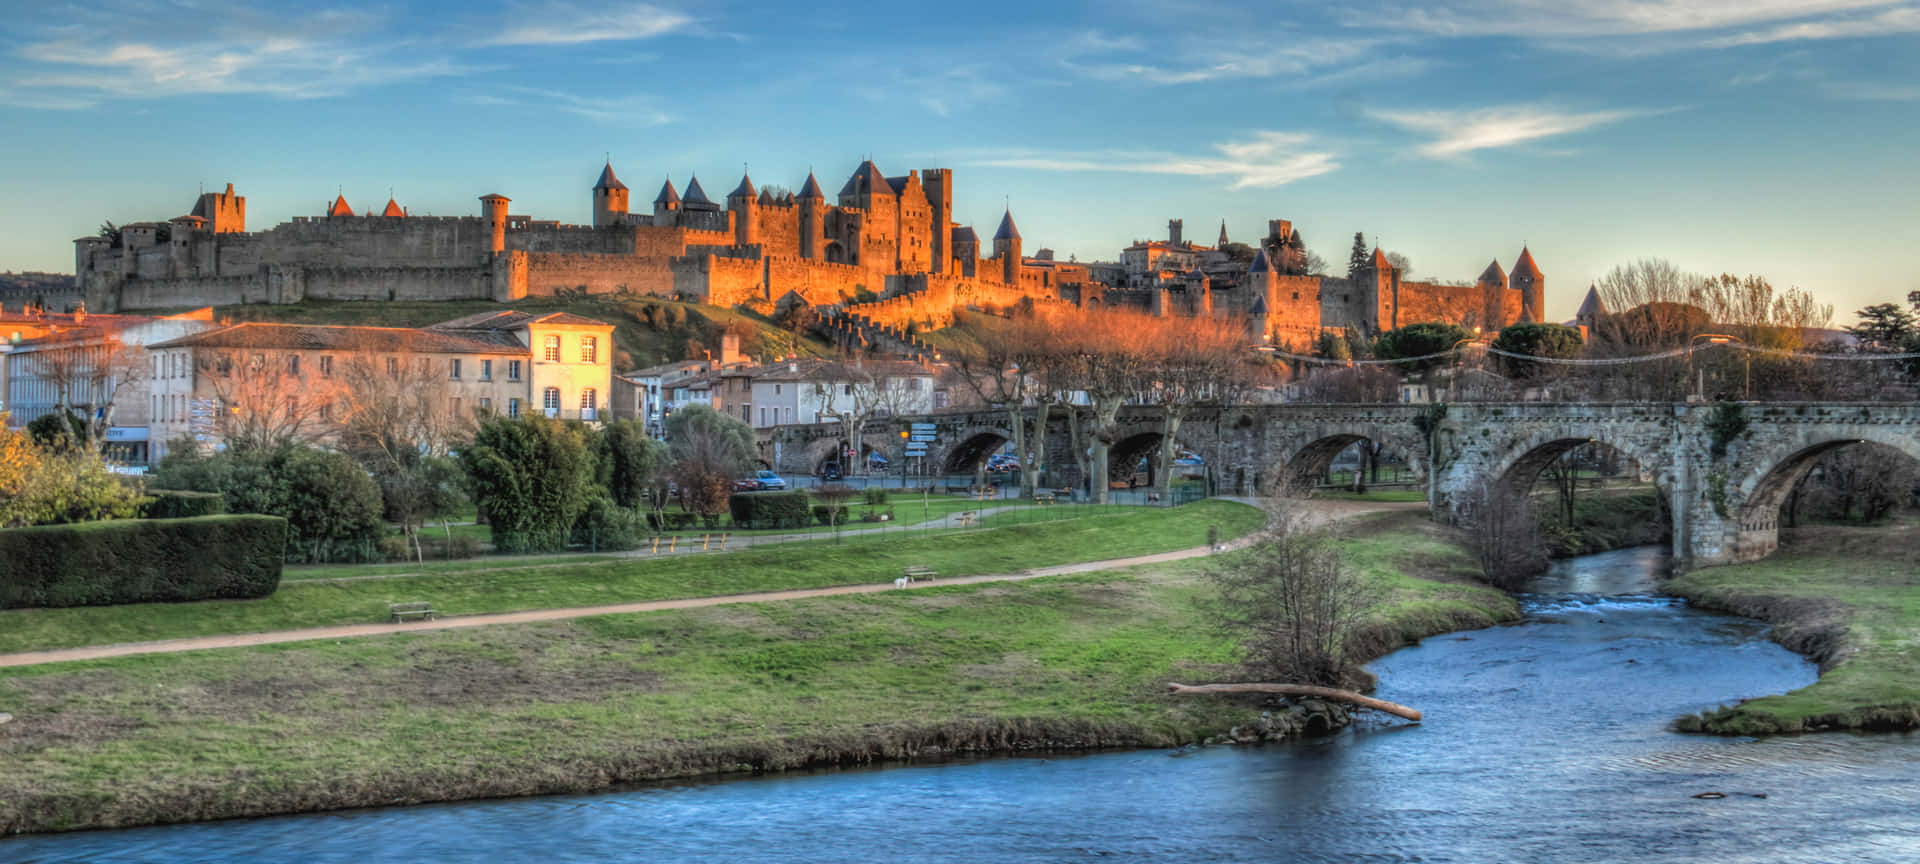 Pont Vieux In Carcassonne France Wallpaper